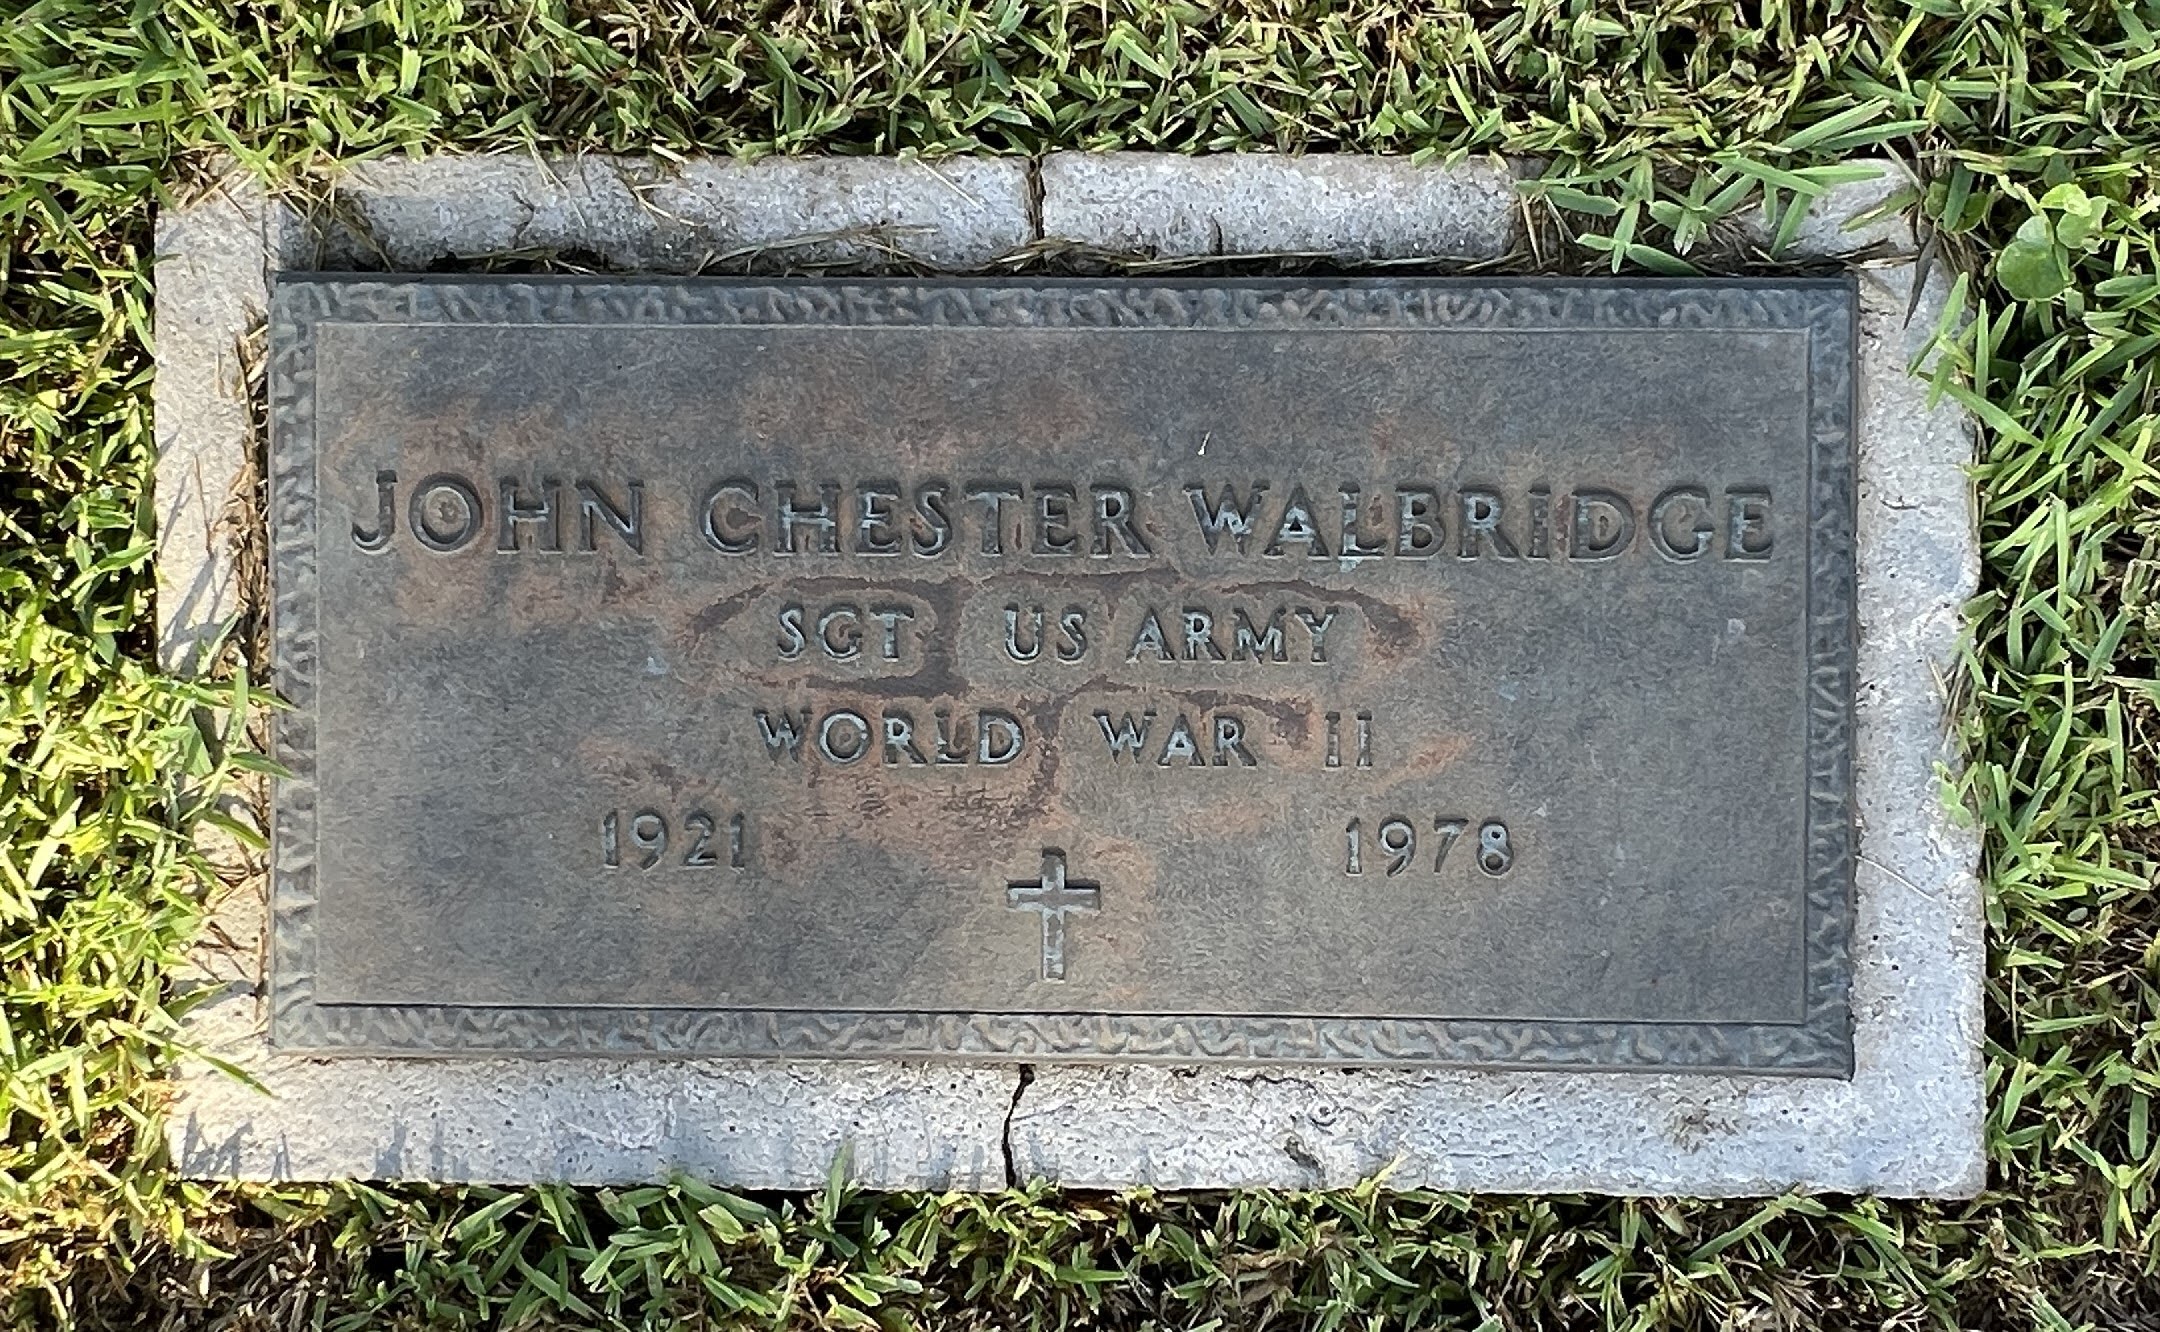 Sgt John Chester Walbridge